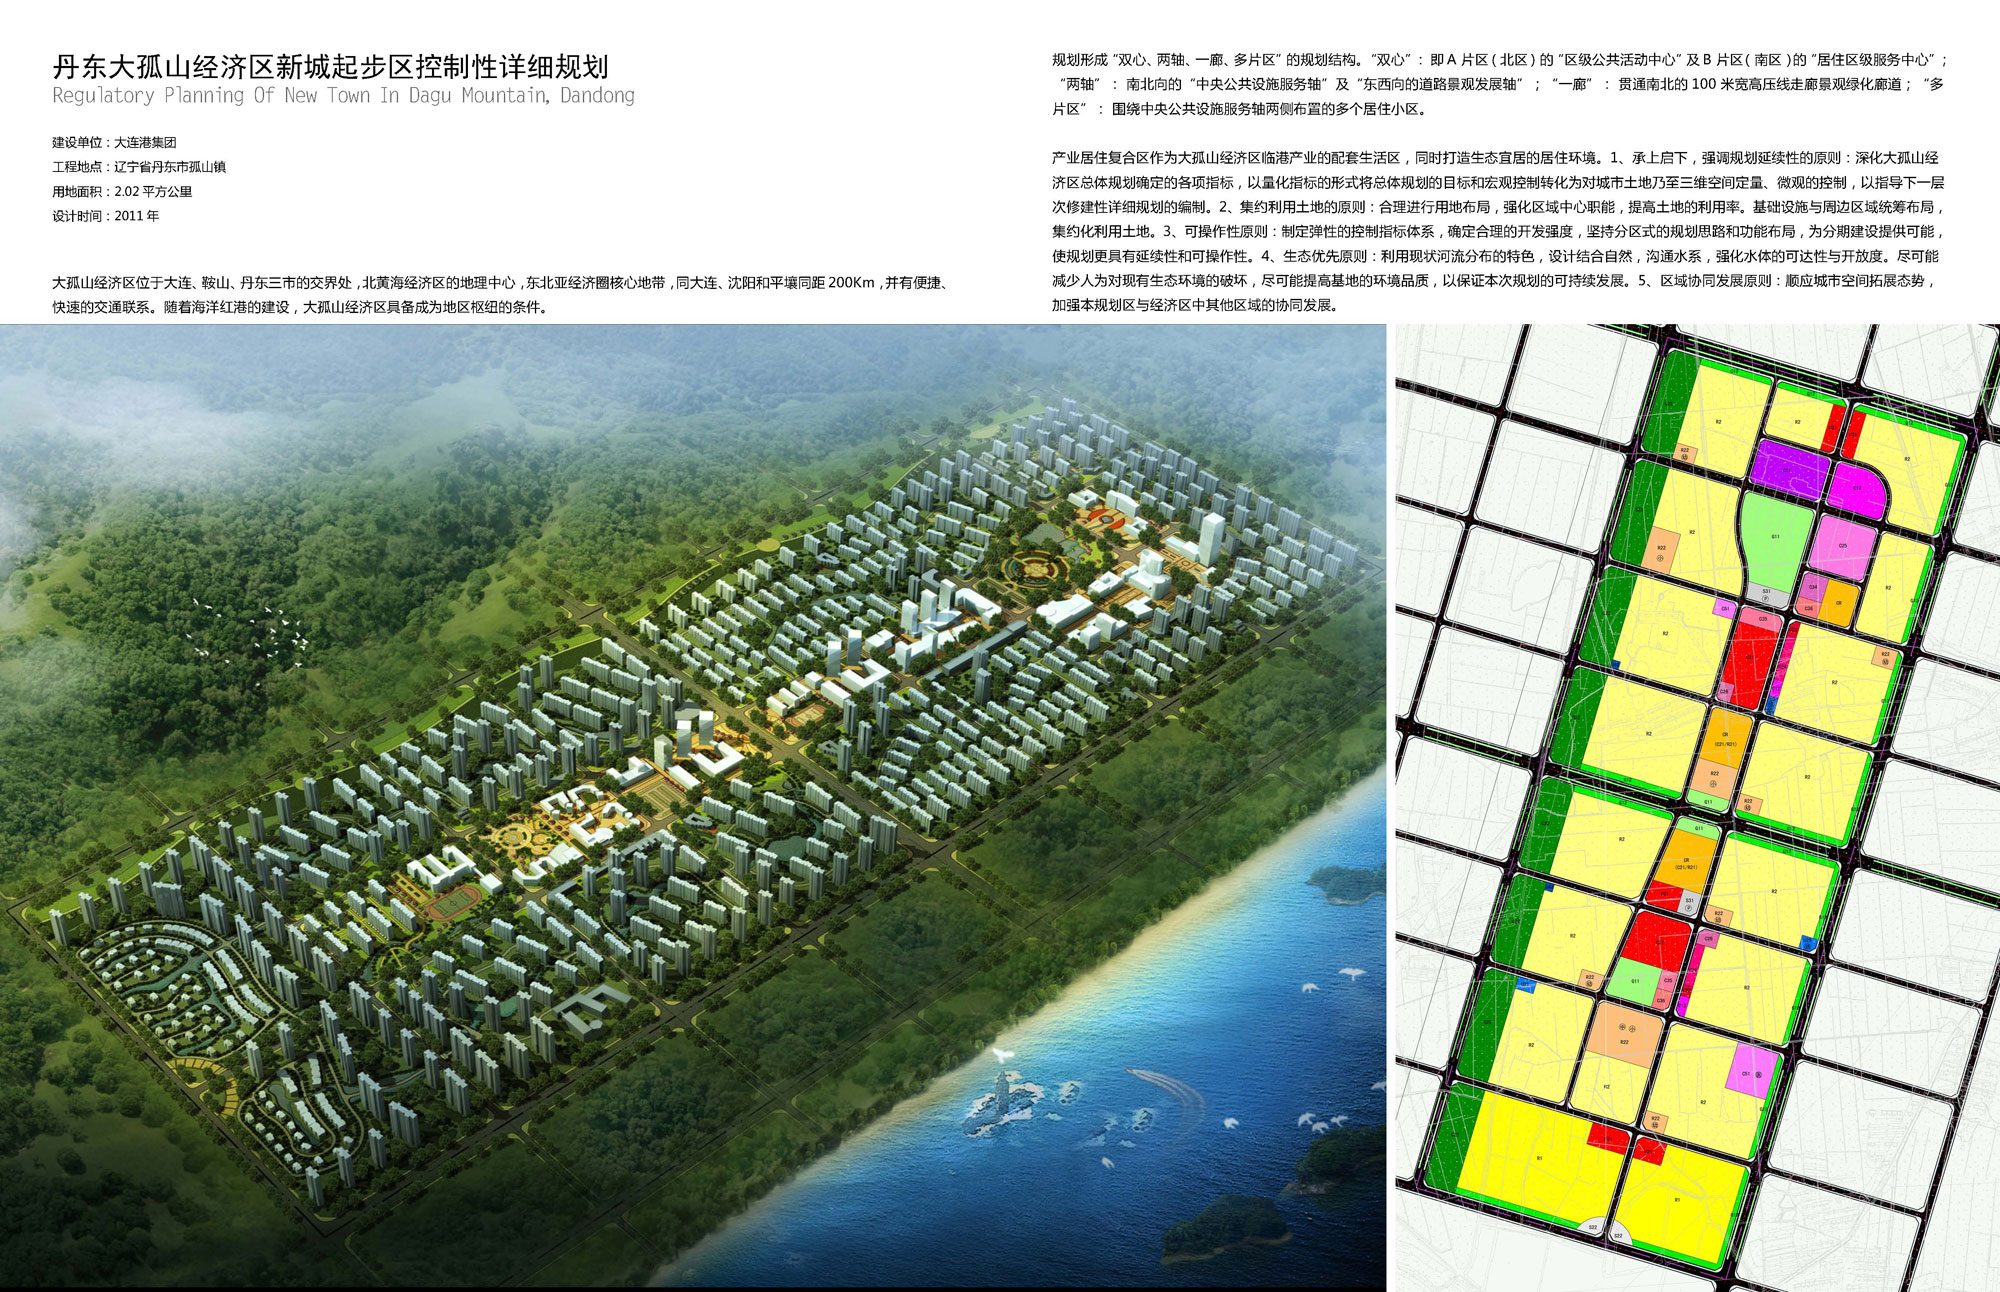 Dandong Dagu Mountain Economic Zone New Town Start-up Area Regulatory Detailed Planning